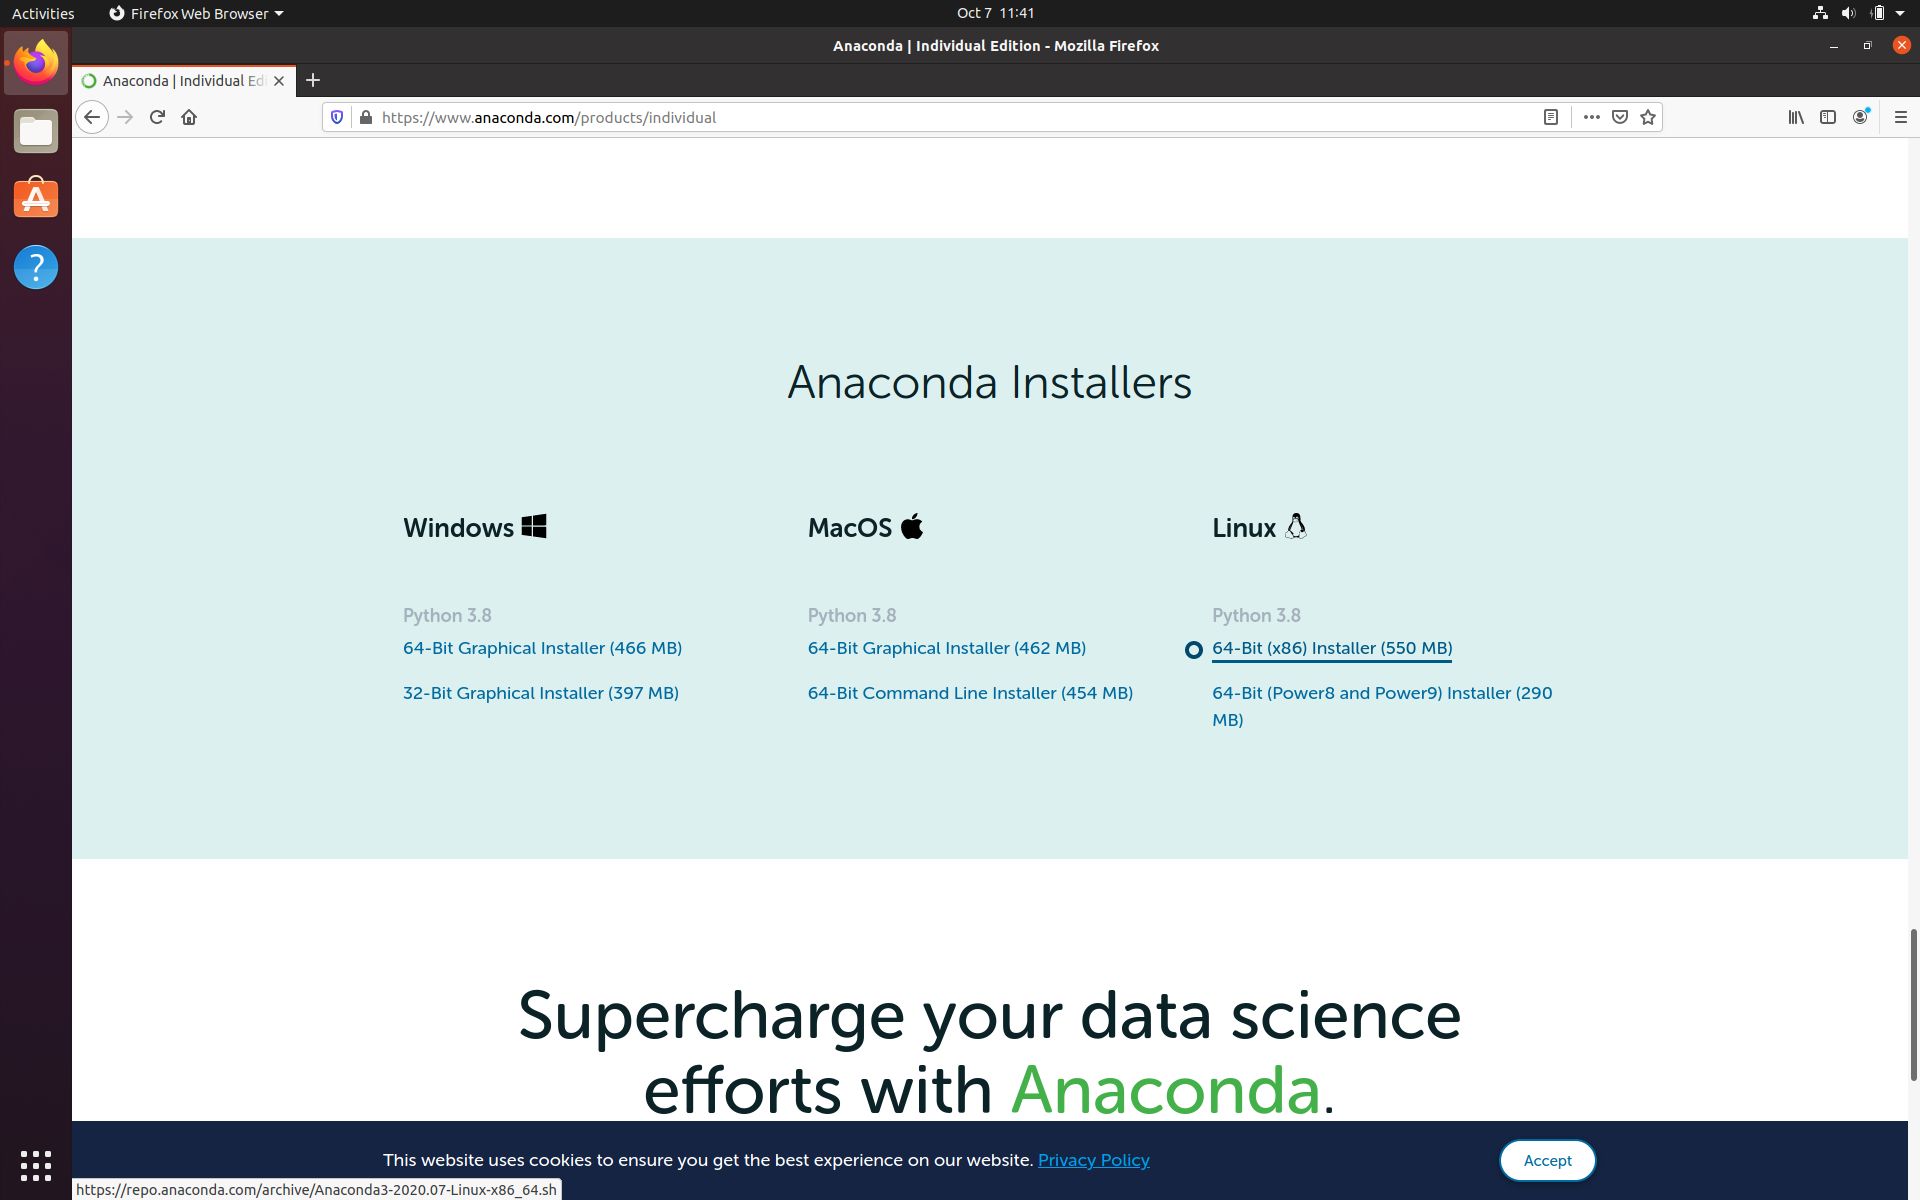 Anaconda webpage scrolled